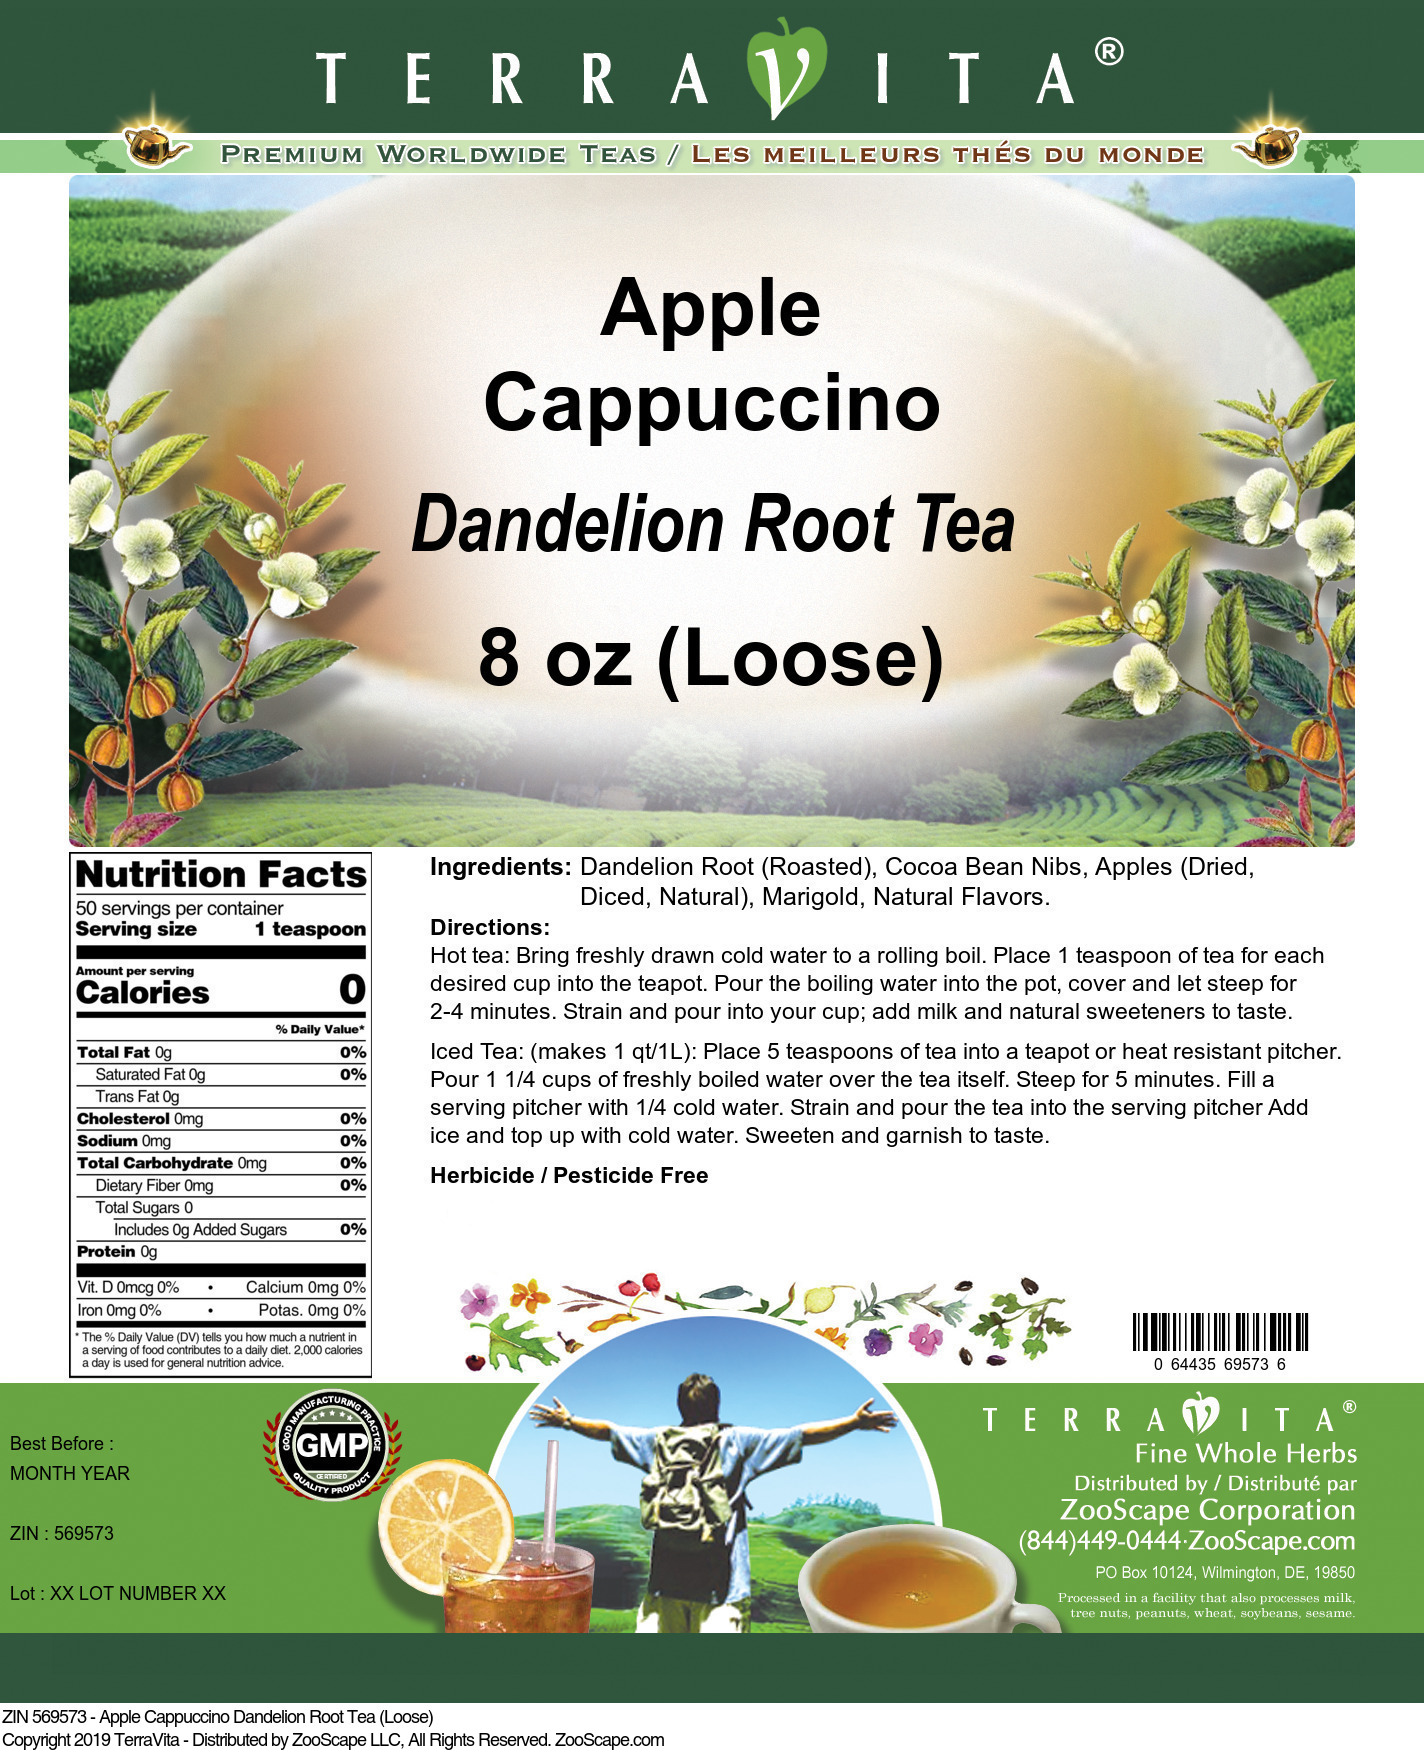 Apple Cappuccino Dandelion Root Tea (Loose) - Label